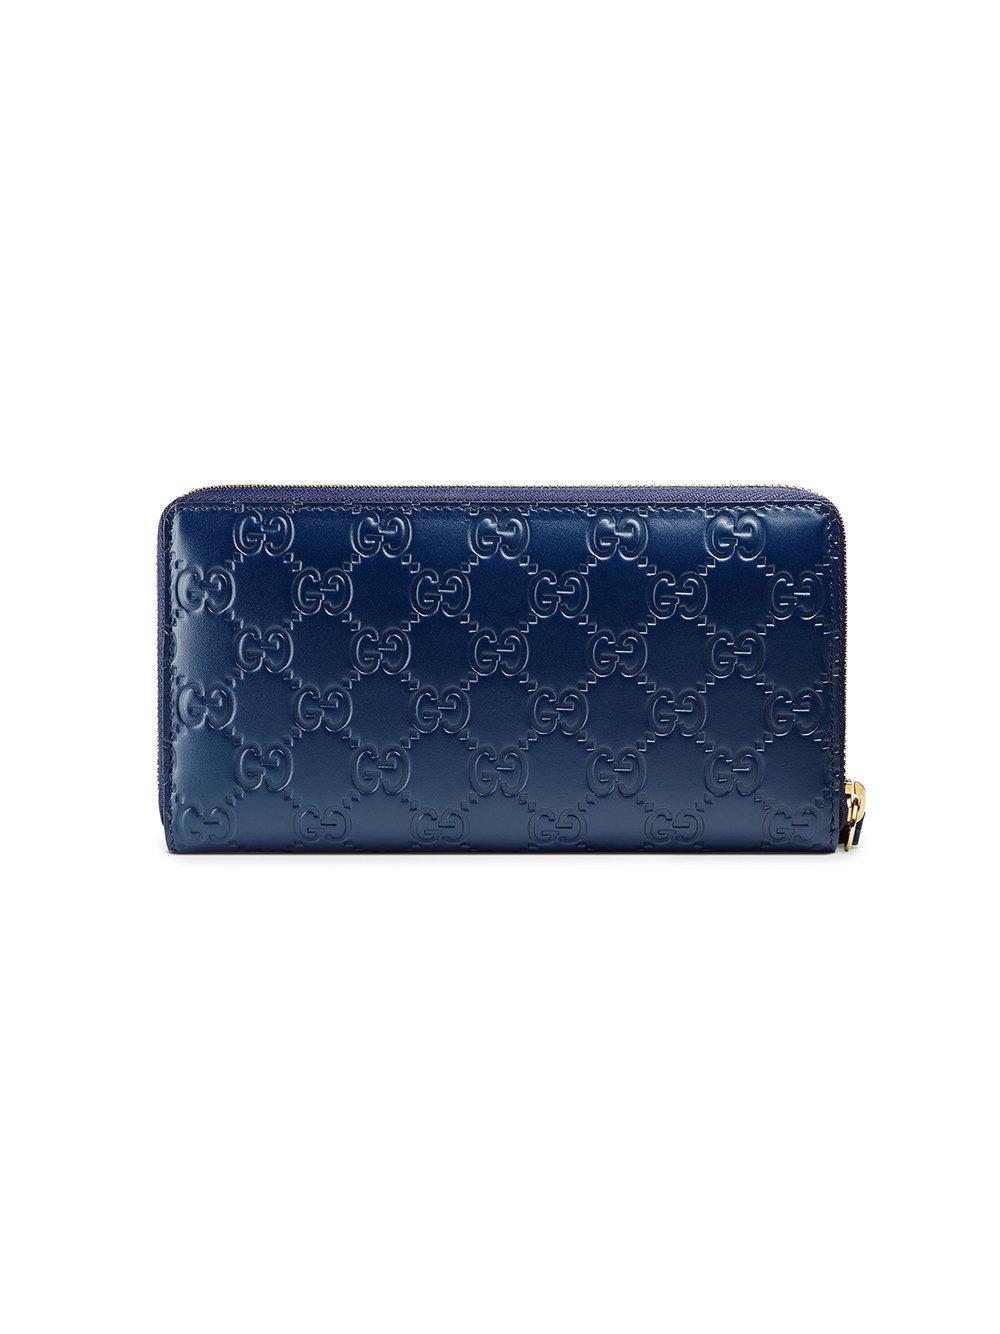 gucci blue wallet